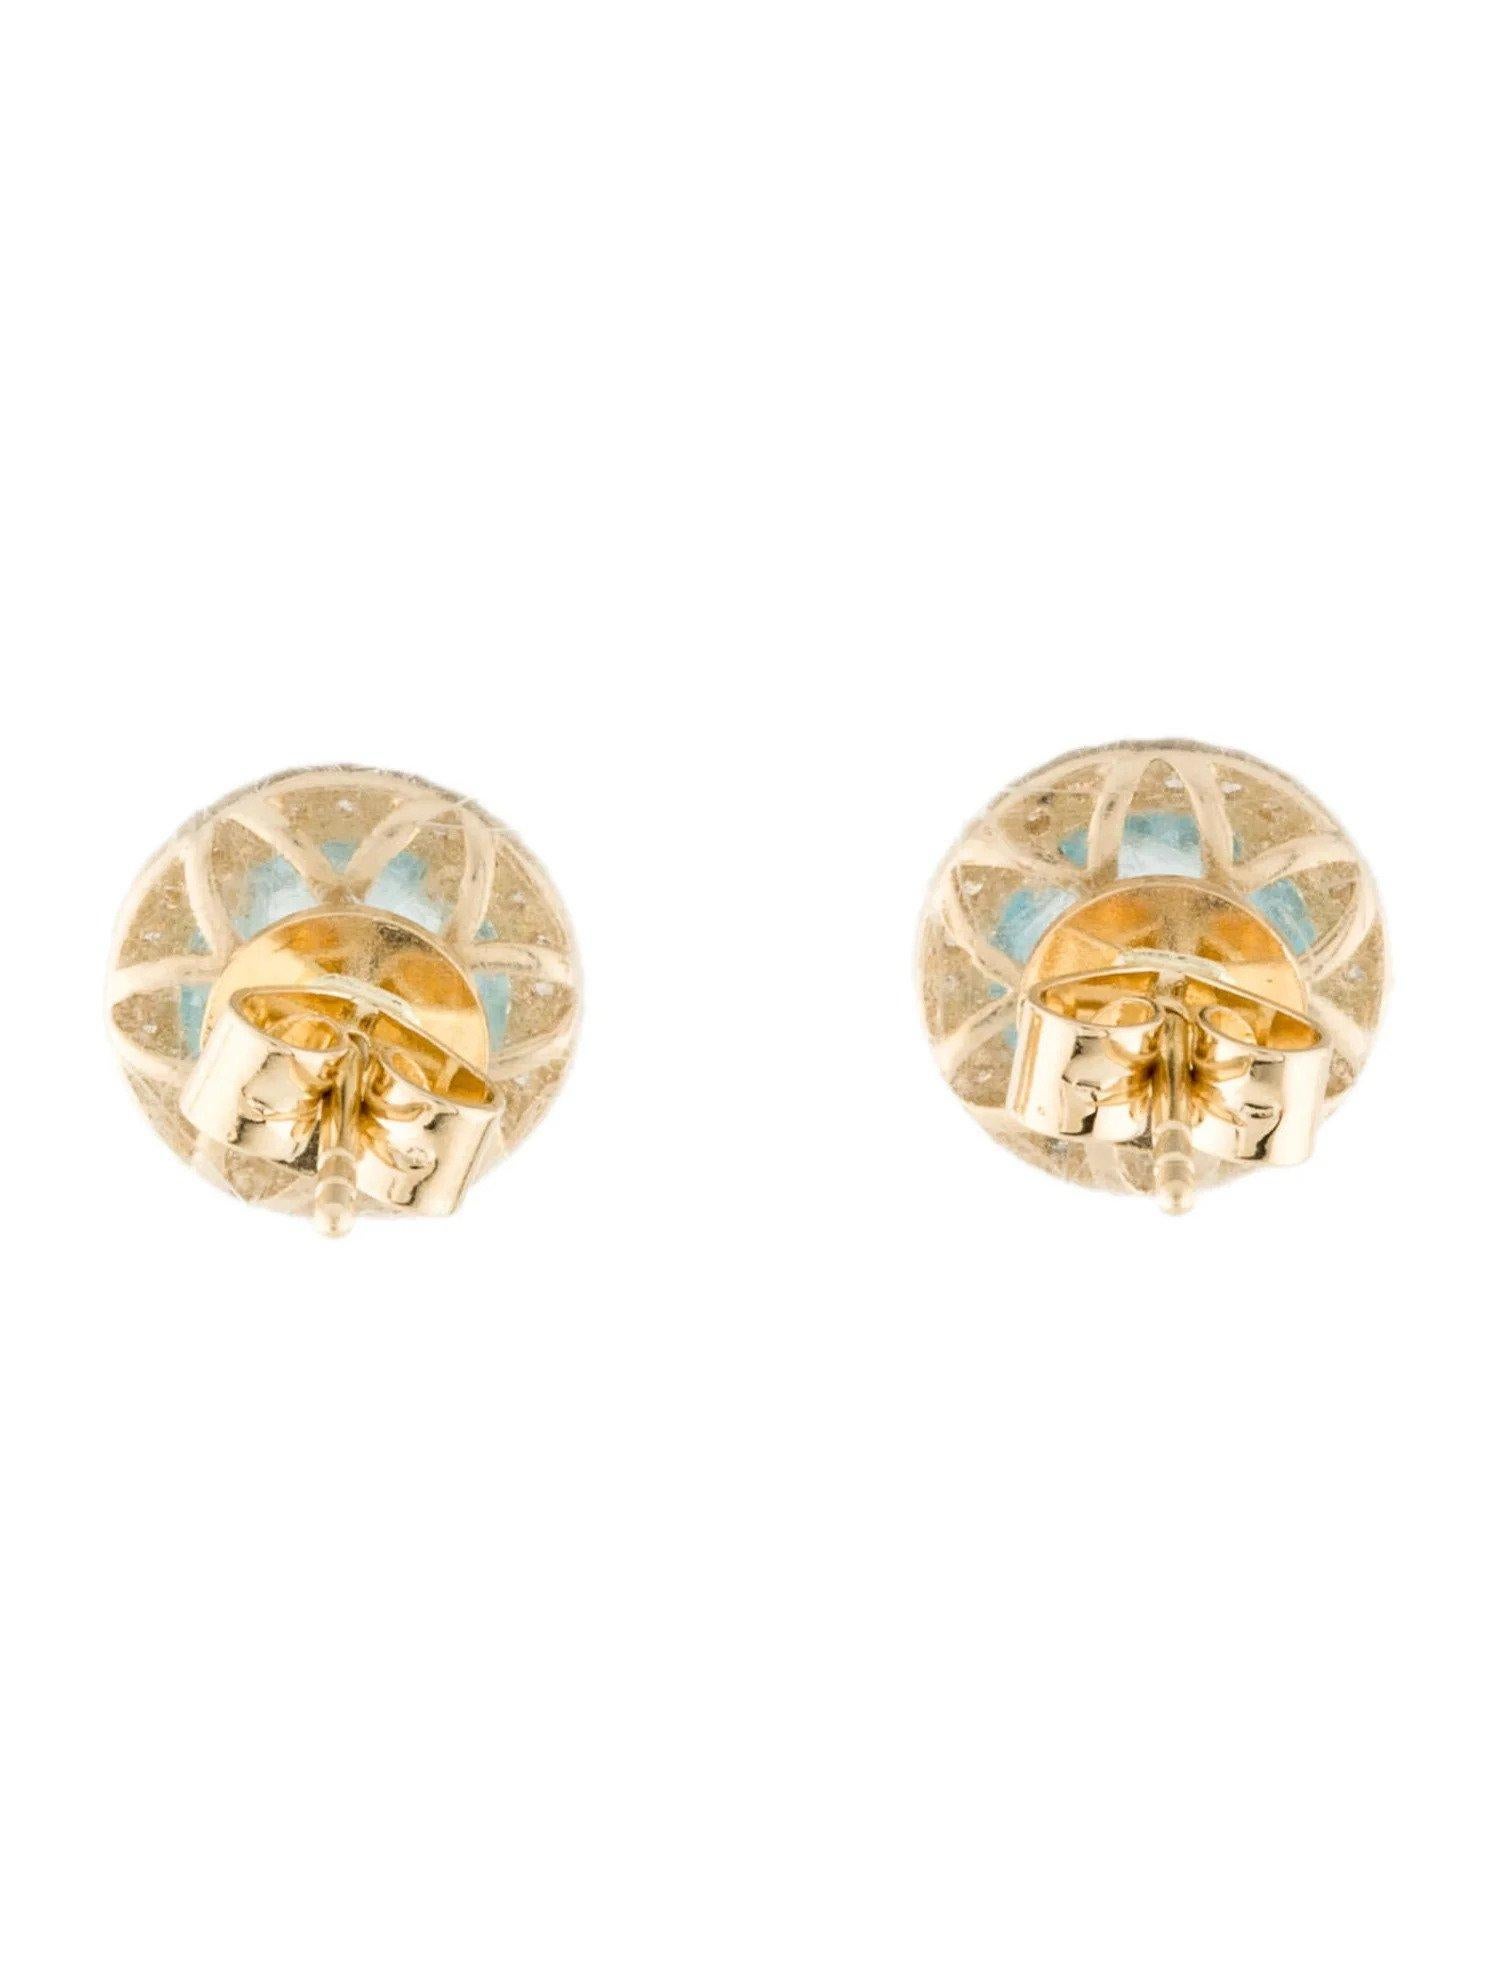 Women's 2.39 Carat Round Blue Topaz & Diamond Yellow Gold Stud Earrings For Sale